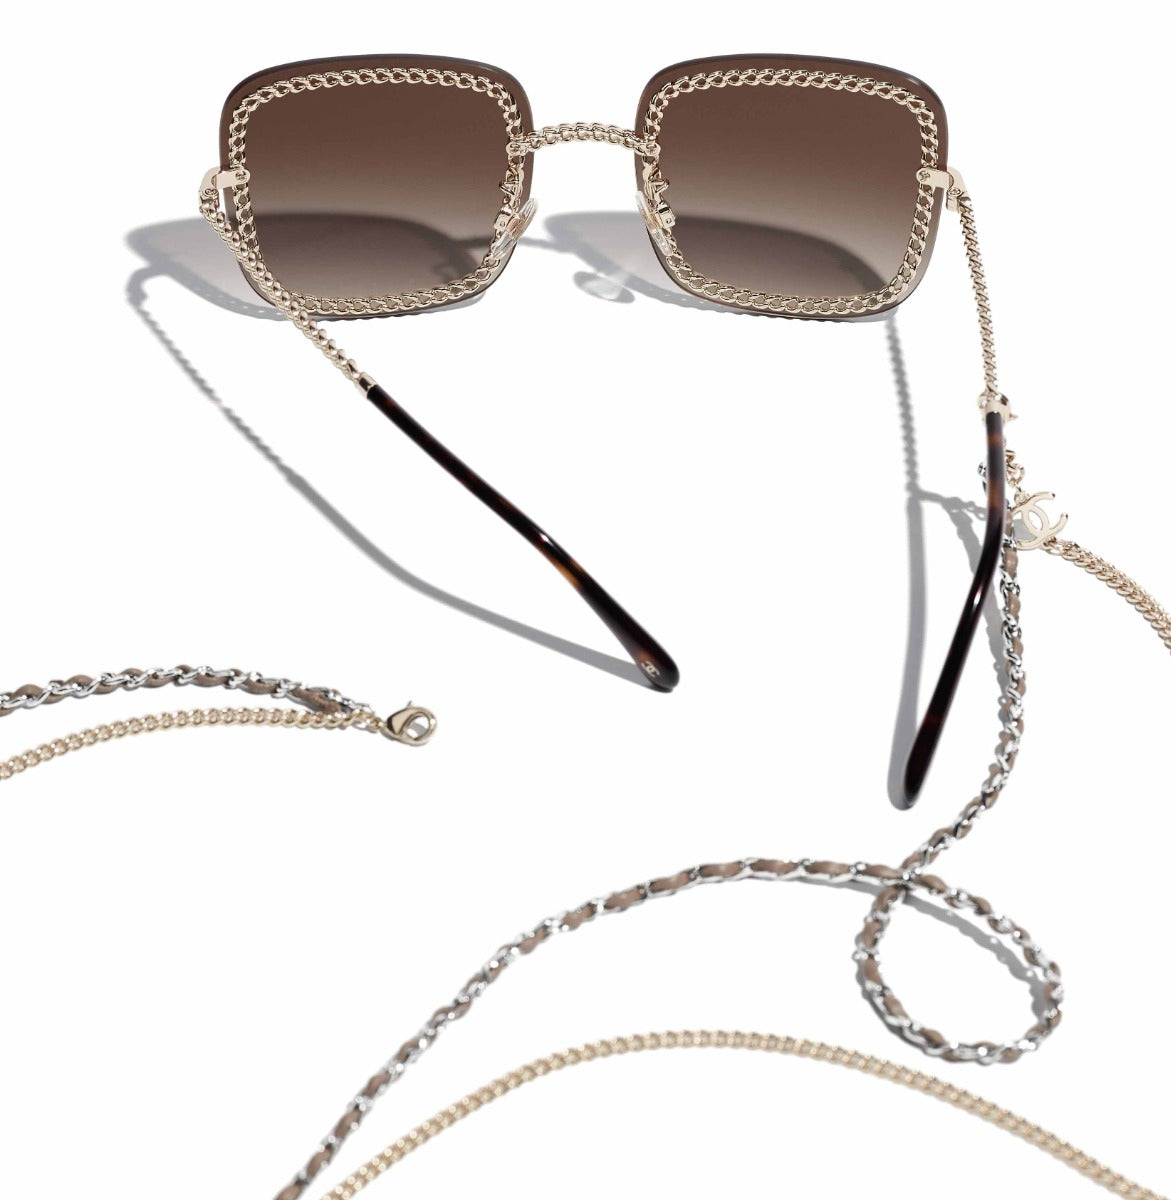 CHANEL Metal Square Frame Pearl Sunglasses 4235-H Dark Grey 698366